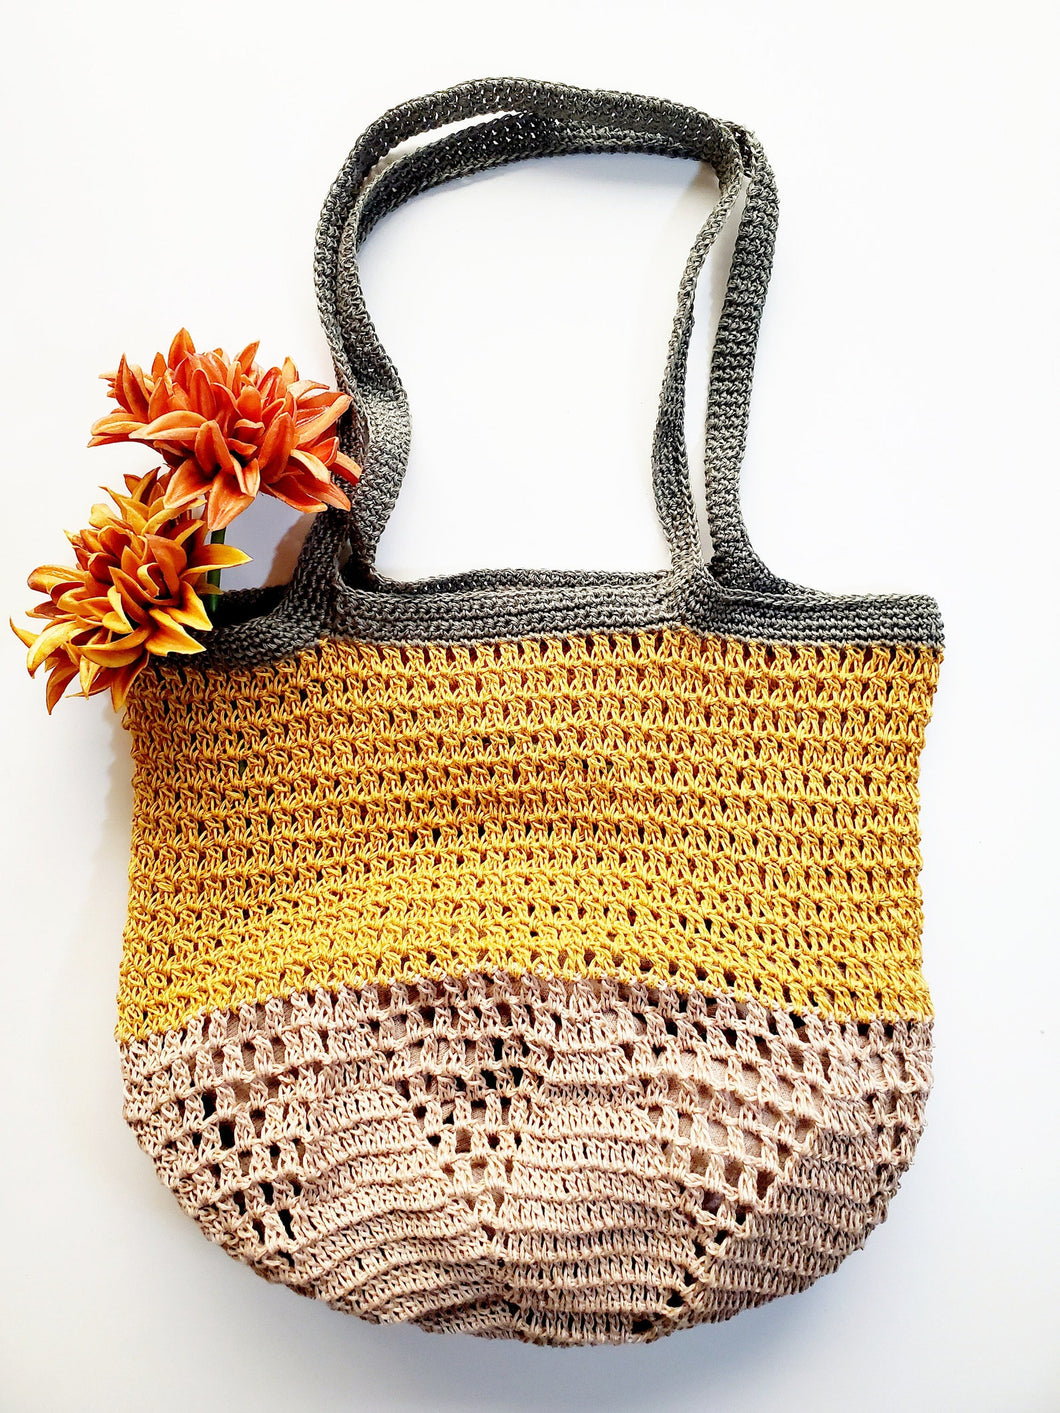 Acorn Market Bag Crochet PDF Pattern by Raine Eimre